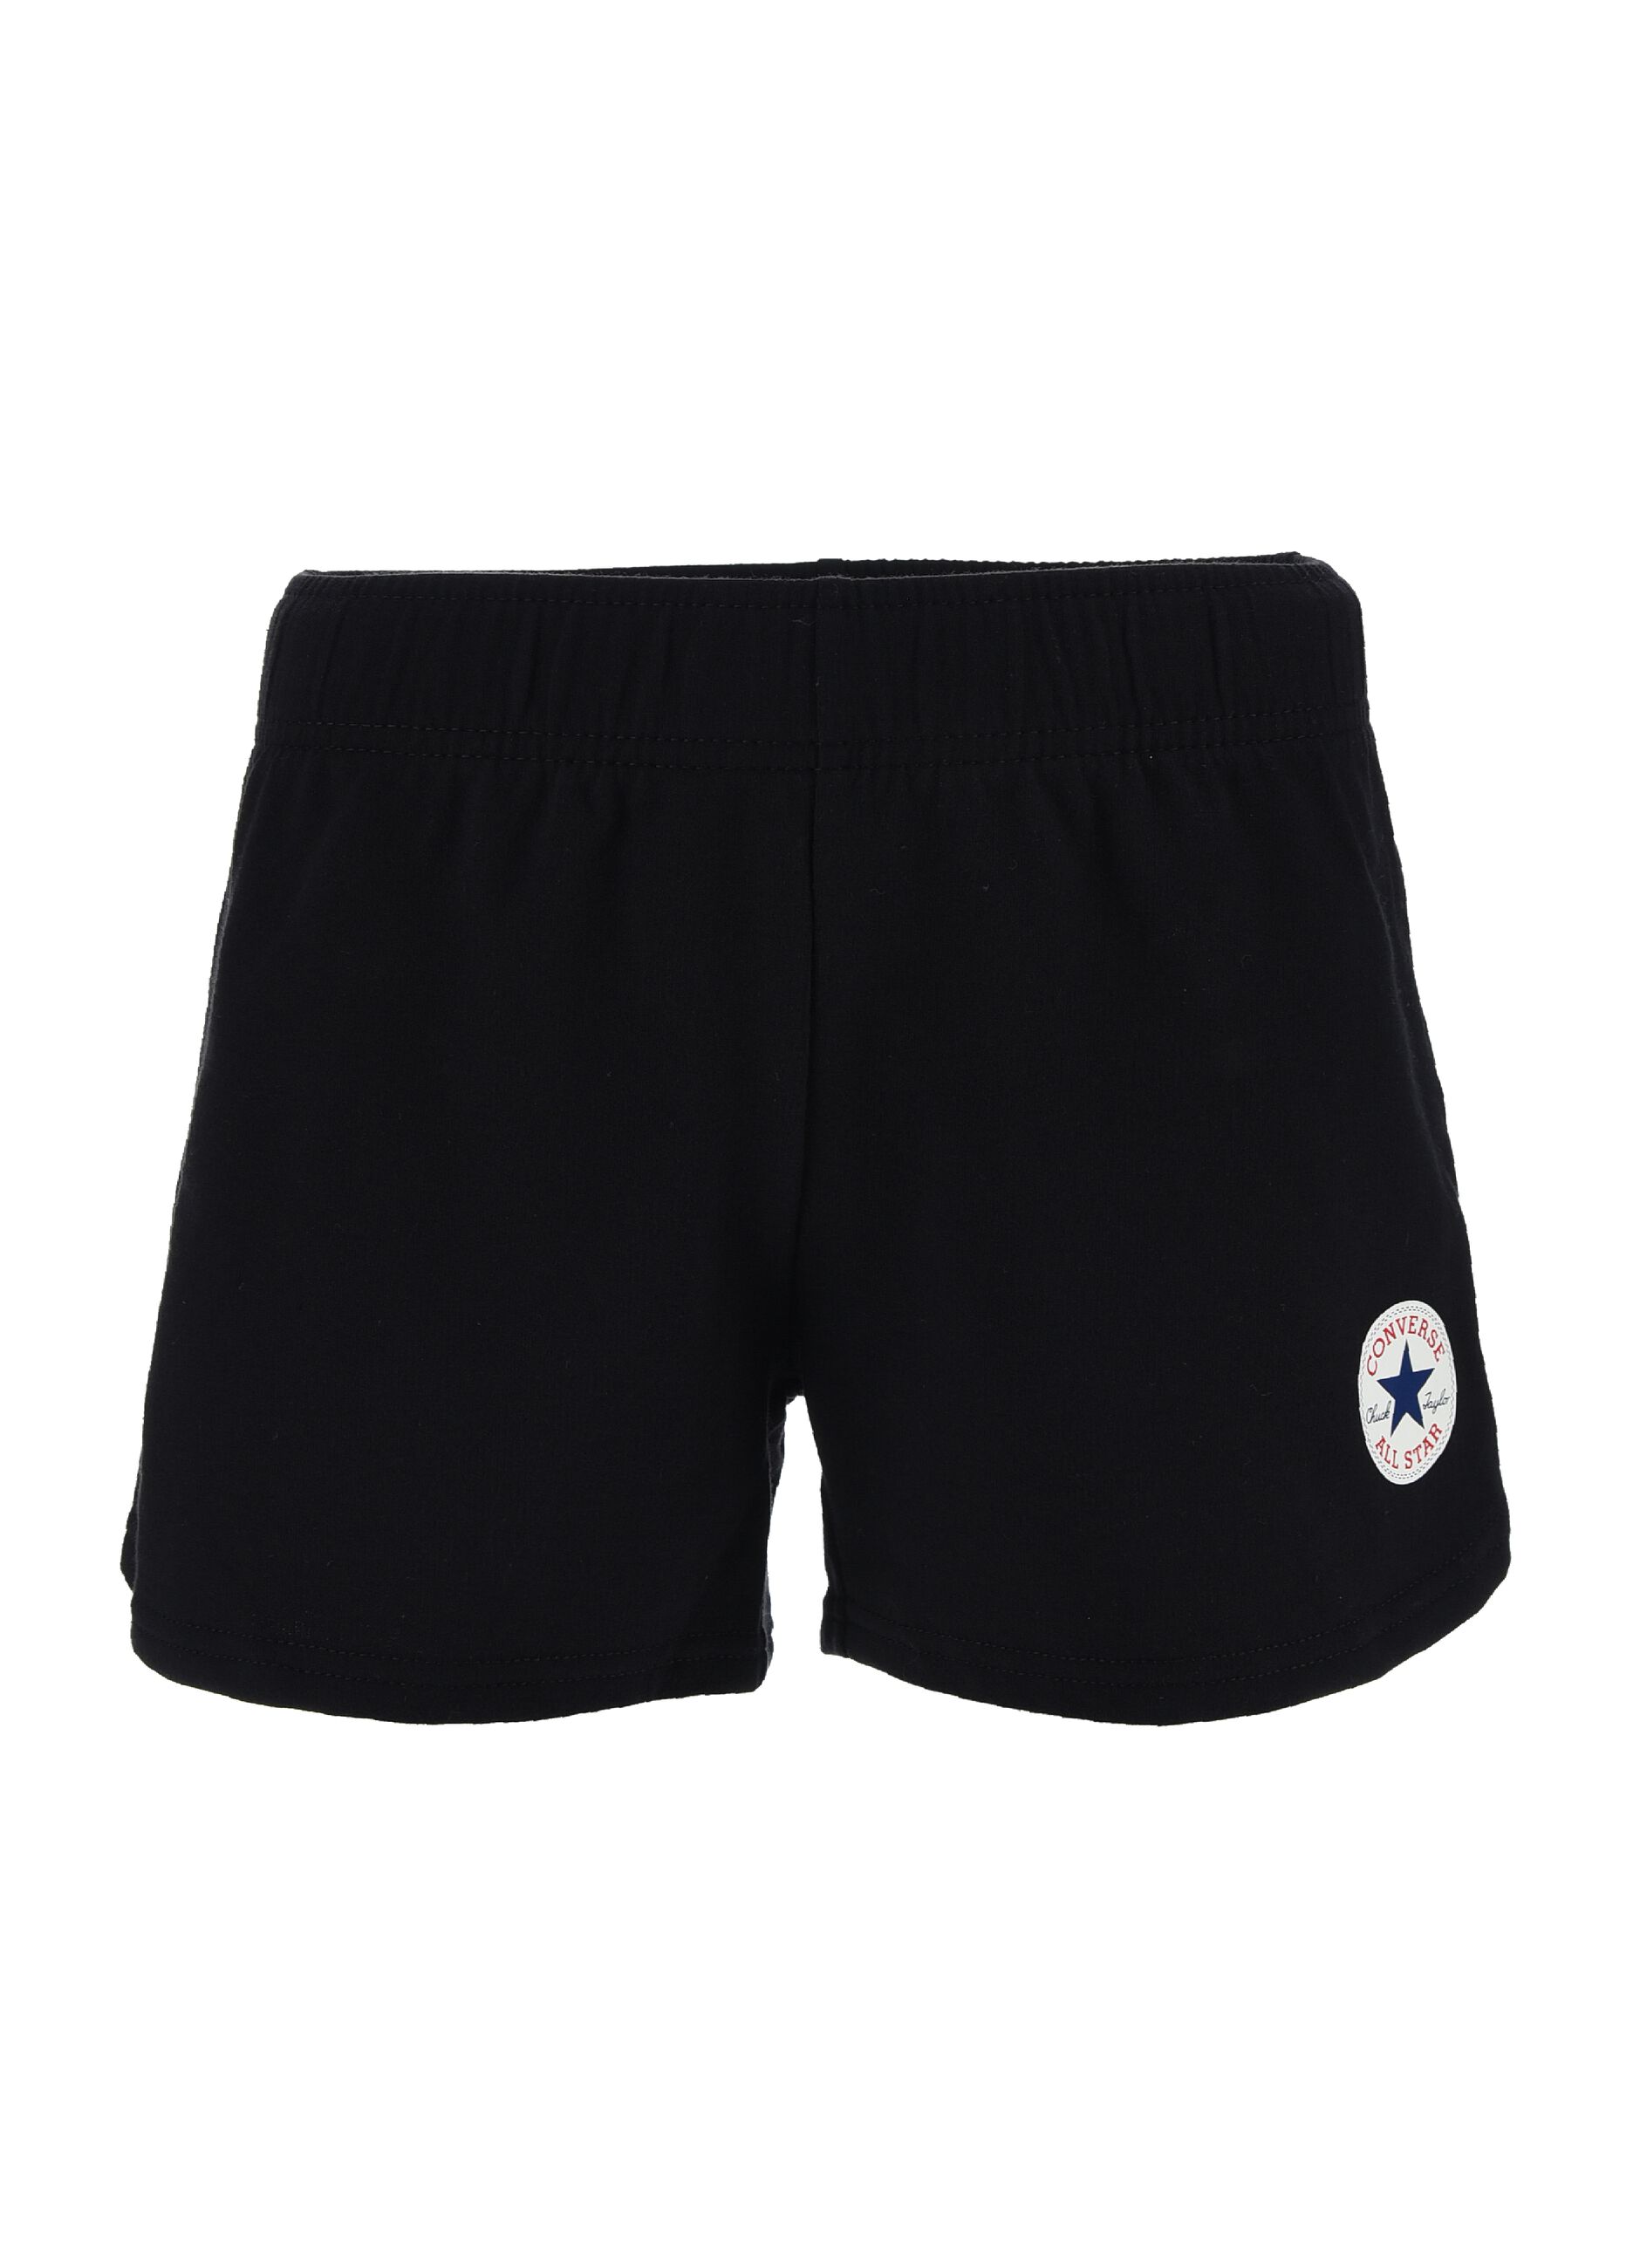 Fleece shorts with Chuck Patch logo print